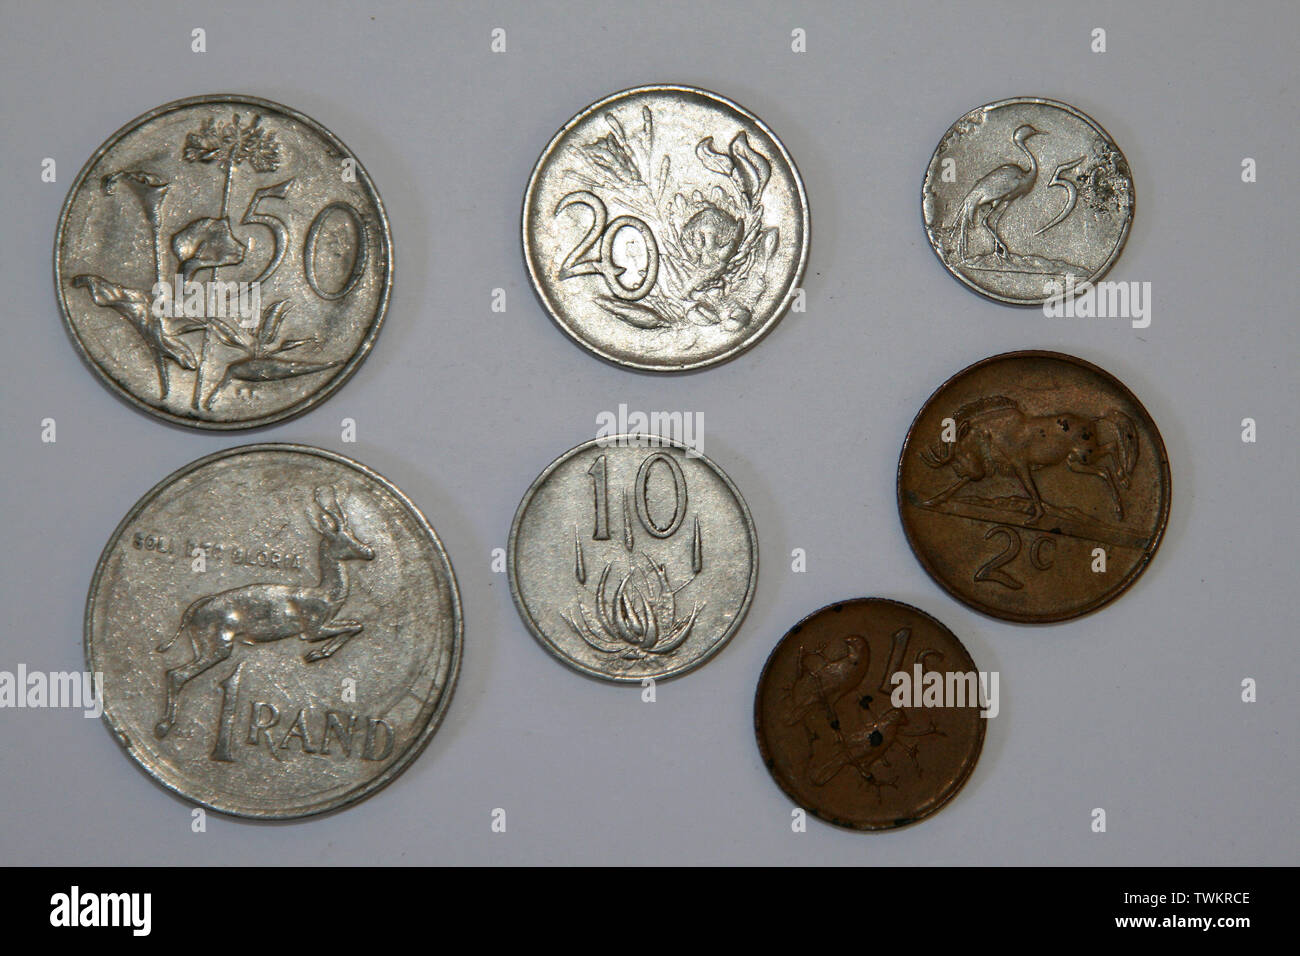 South Africa 1 Rand, 50 cent, 20 cent, 10 cent, 5 cent, 2 cent and 1 cent coins, 1976 Stock Photo